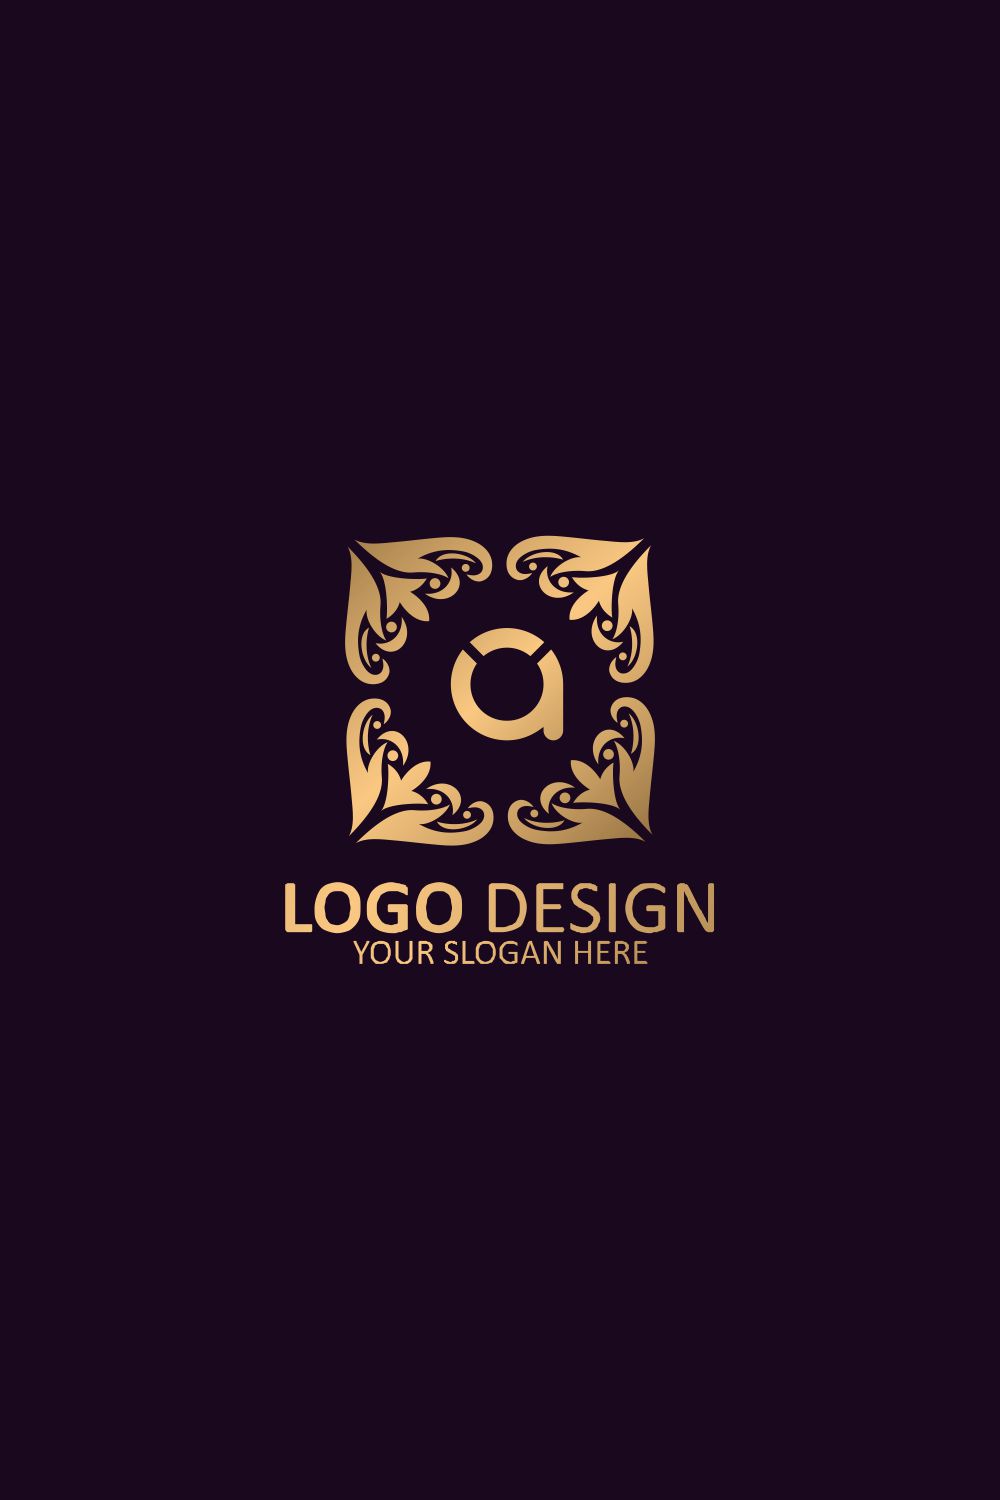 Creative Luxury A Logo Design Template pinterest image.